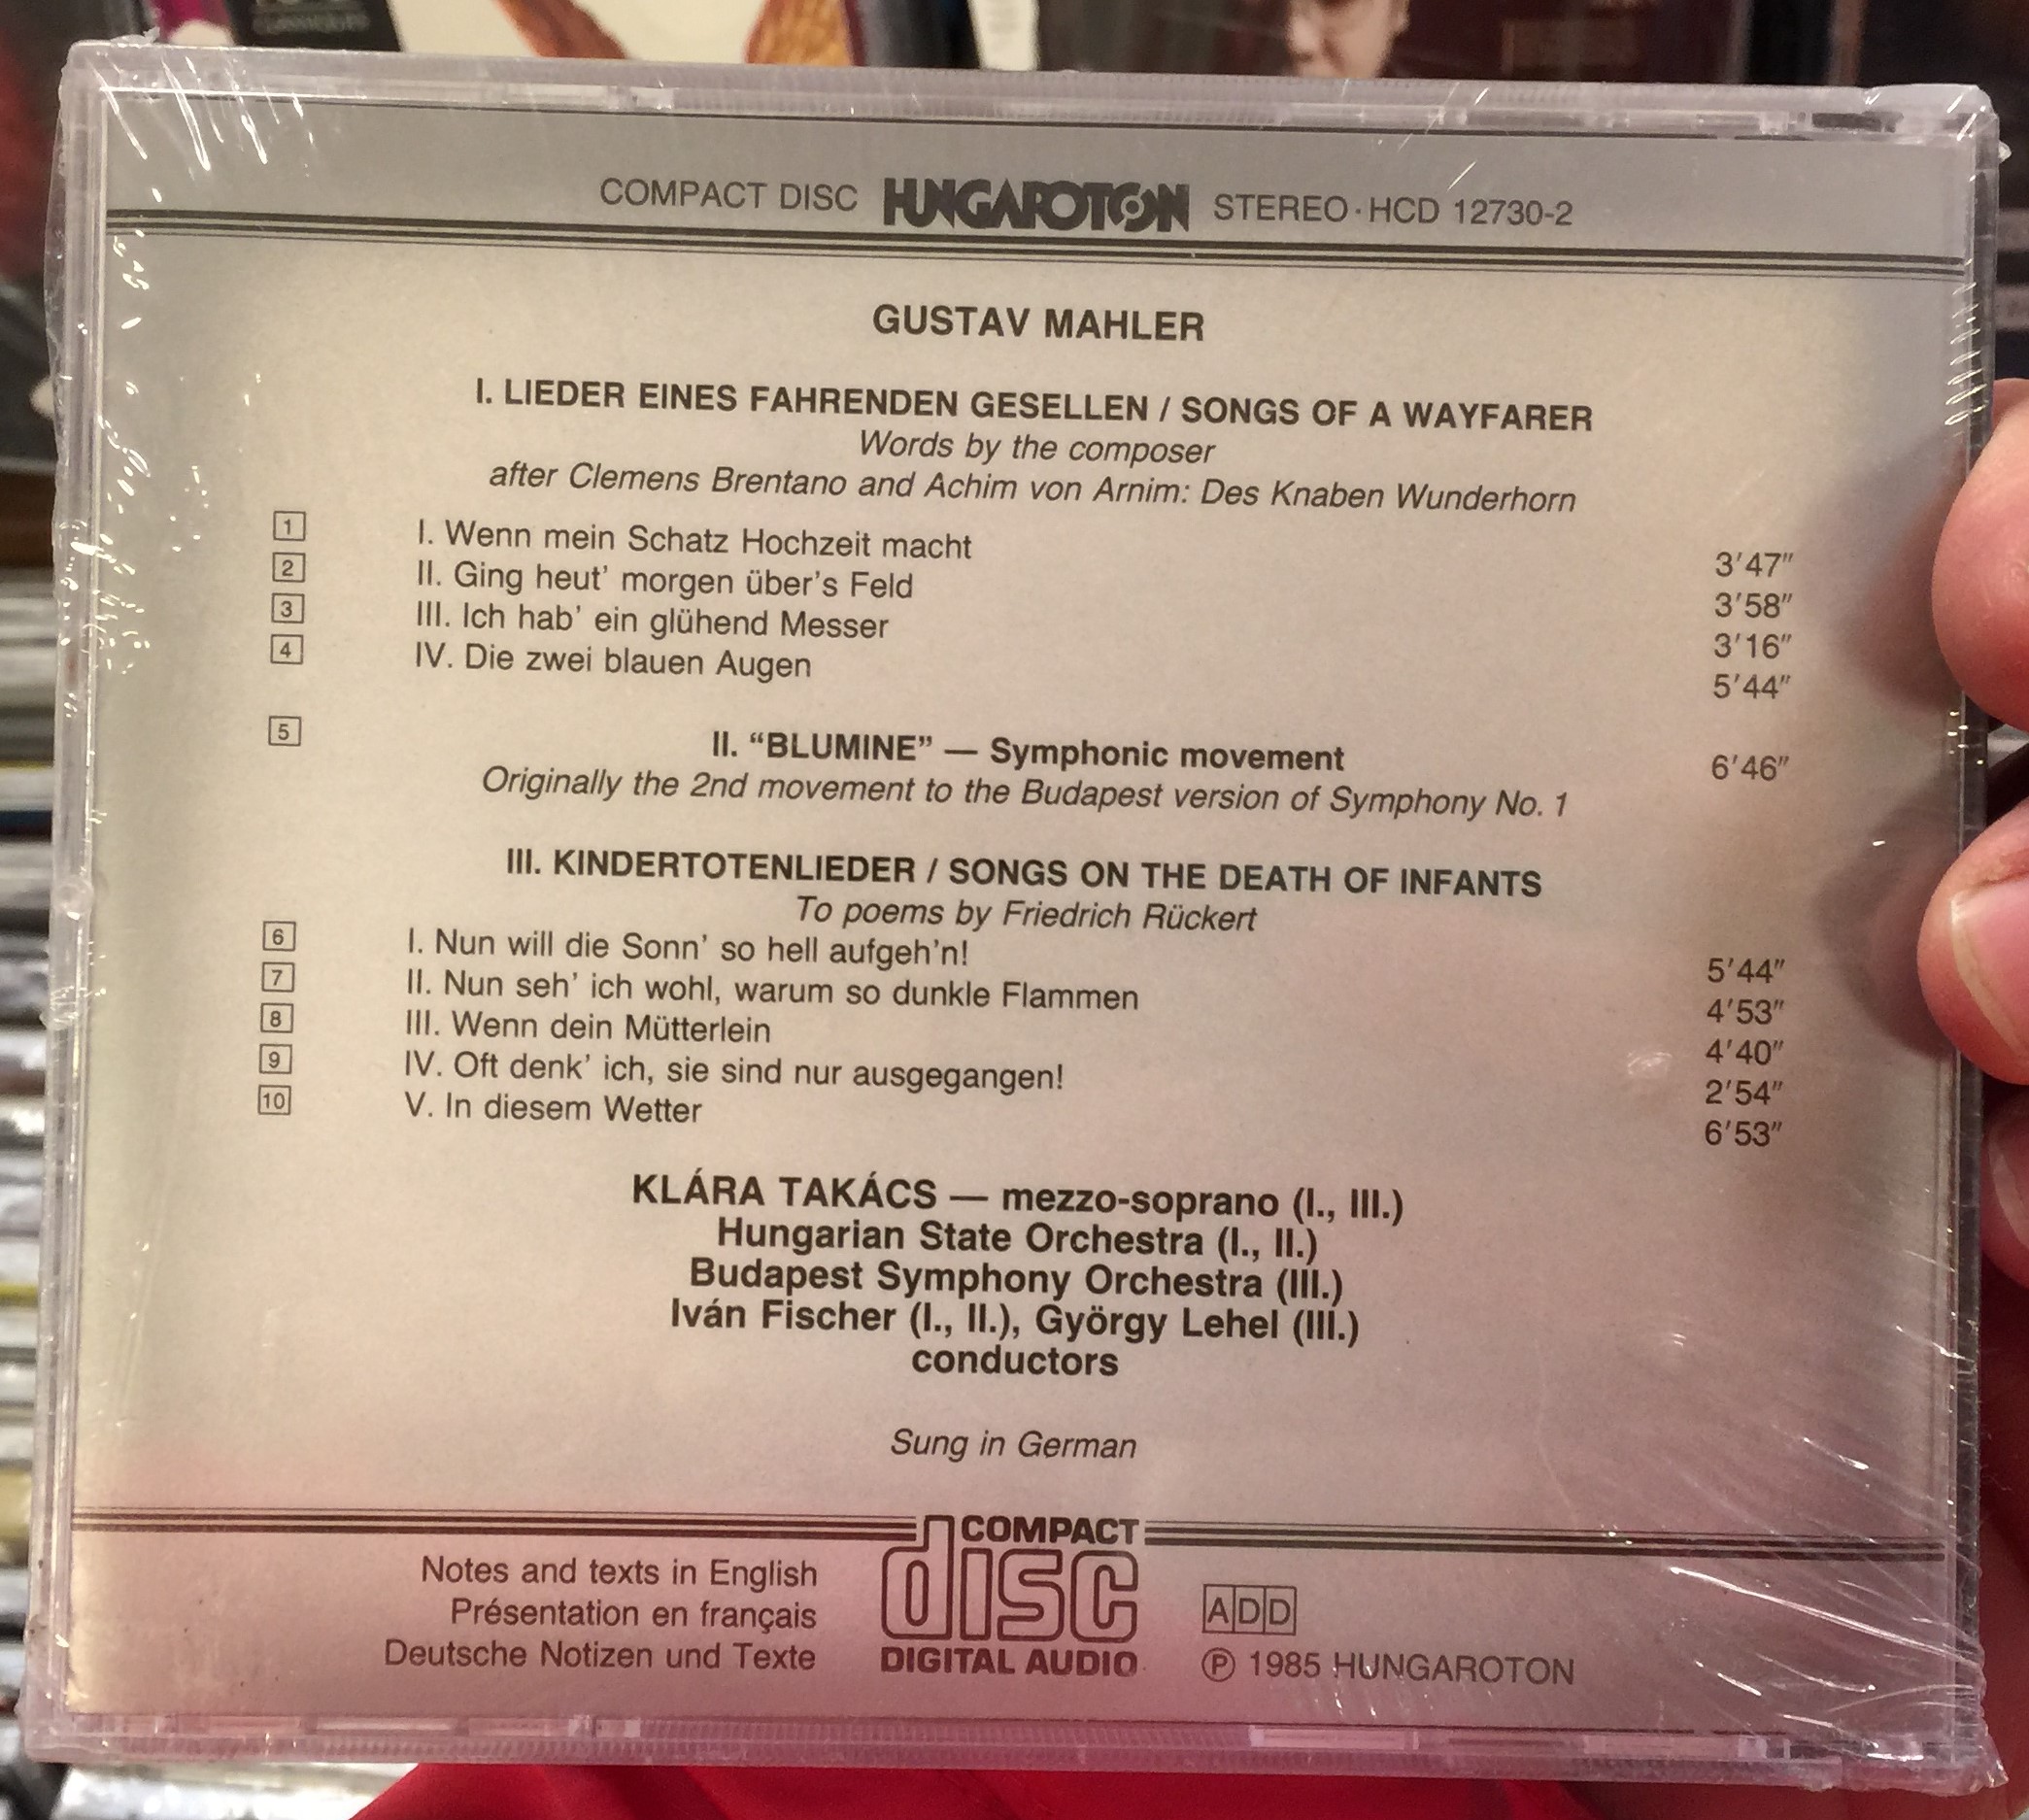 gustav-mahler-lieder-eines-fahrenden-gesellen-blumine-kindertotenlieder-klara-takacs-ivan-fischer-gyorgy-lehel-hungaroton-audio-cd-1985-stereo-hcd-12730-2-2-.jpg